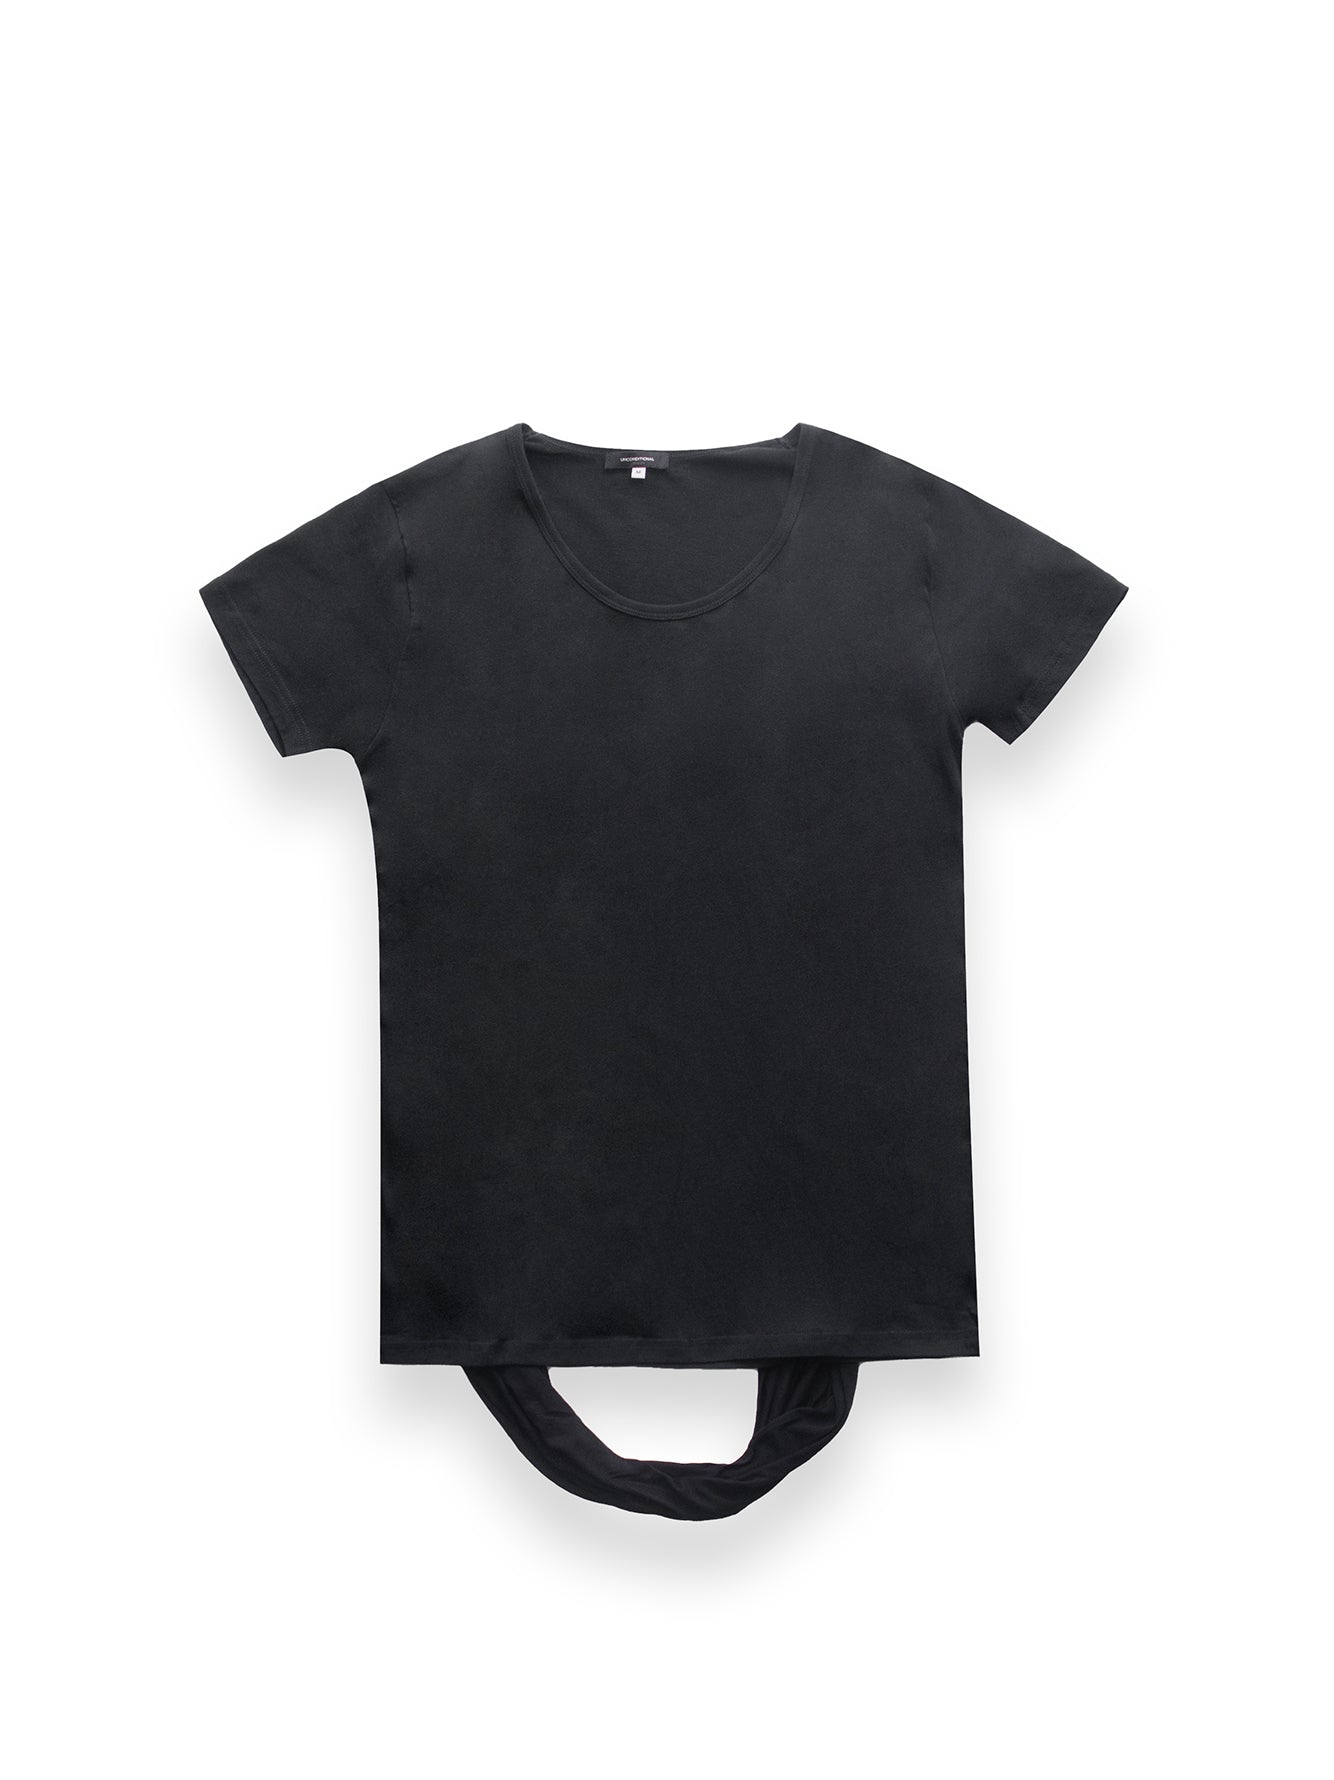 Dark Navy T-Shirt With Black Drape Material Detail